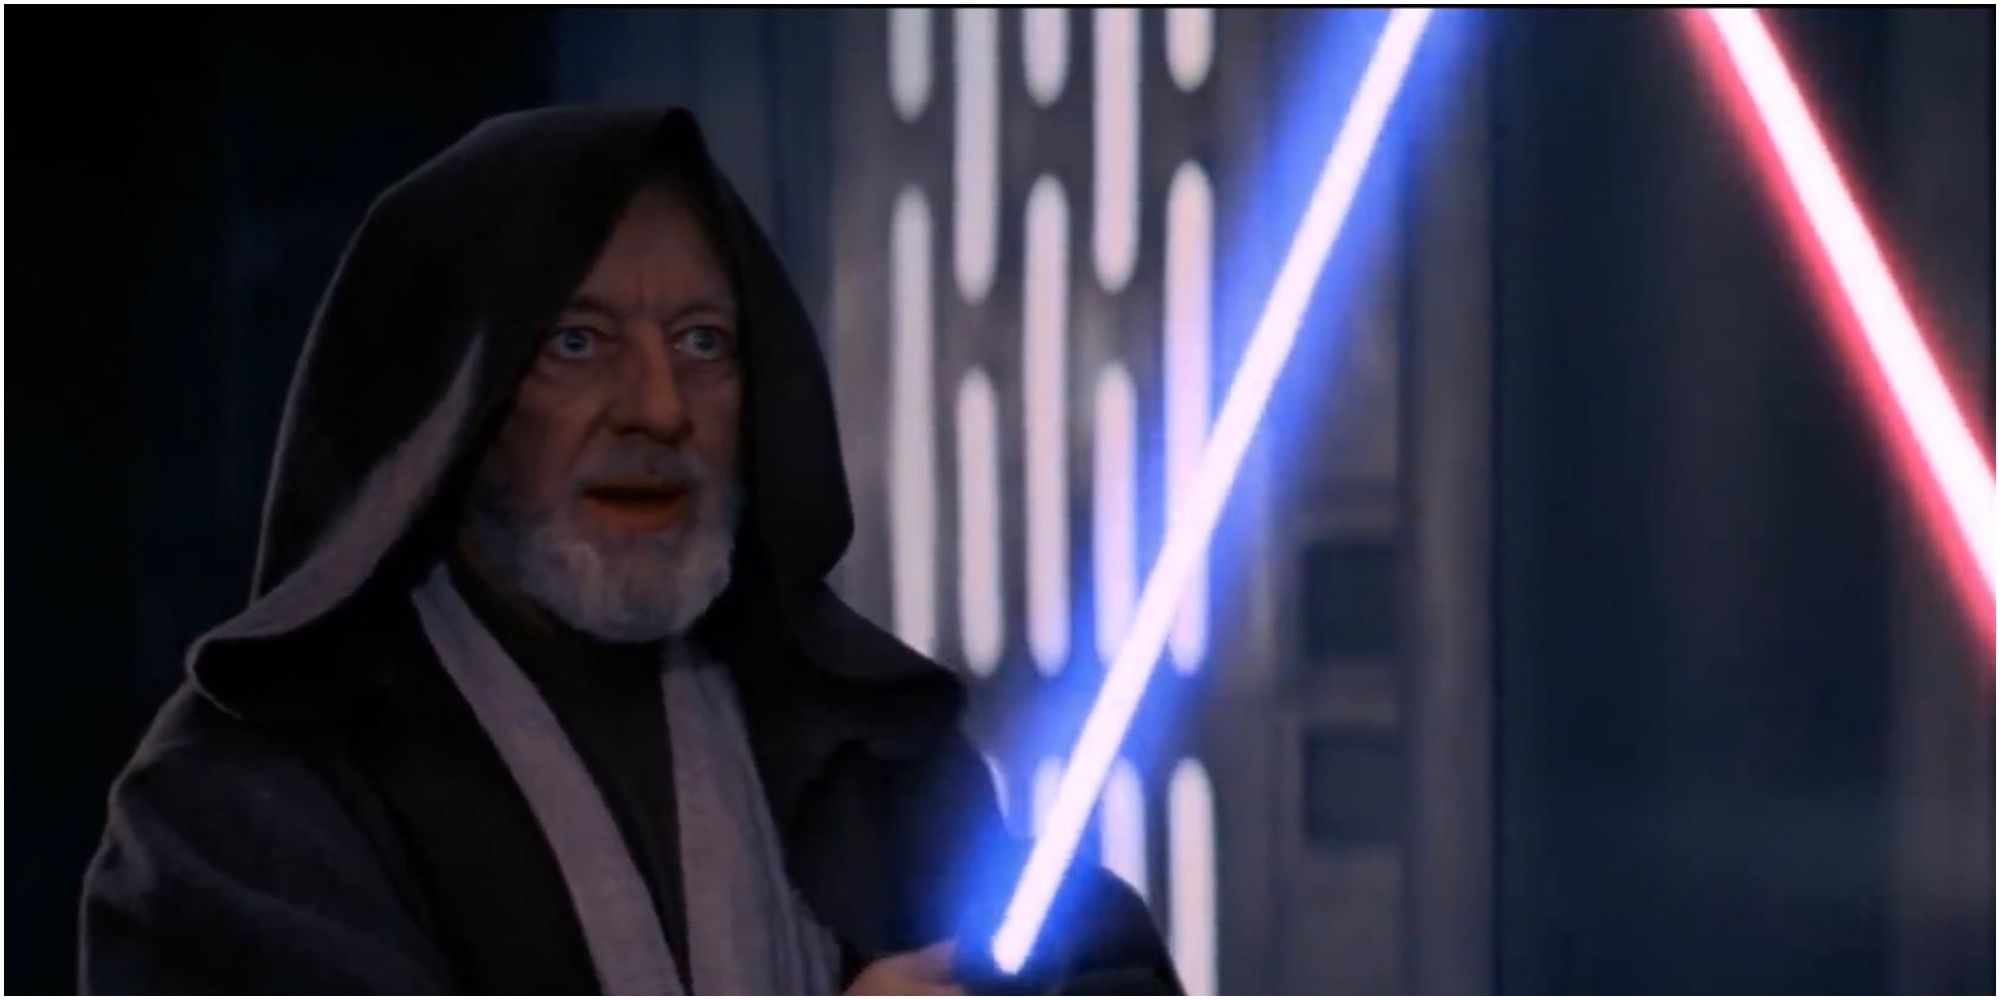 Obi-Wan faces off against Darth Vader, his former apprentice